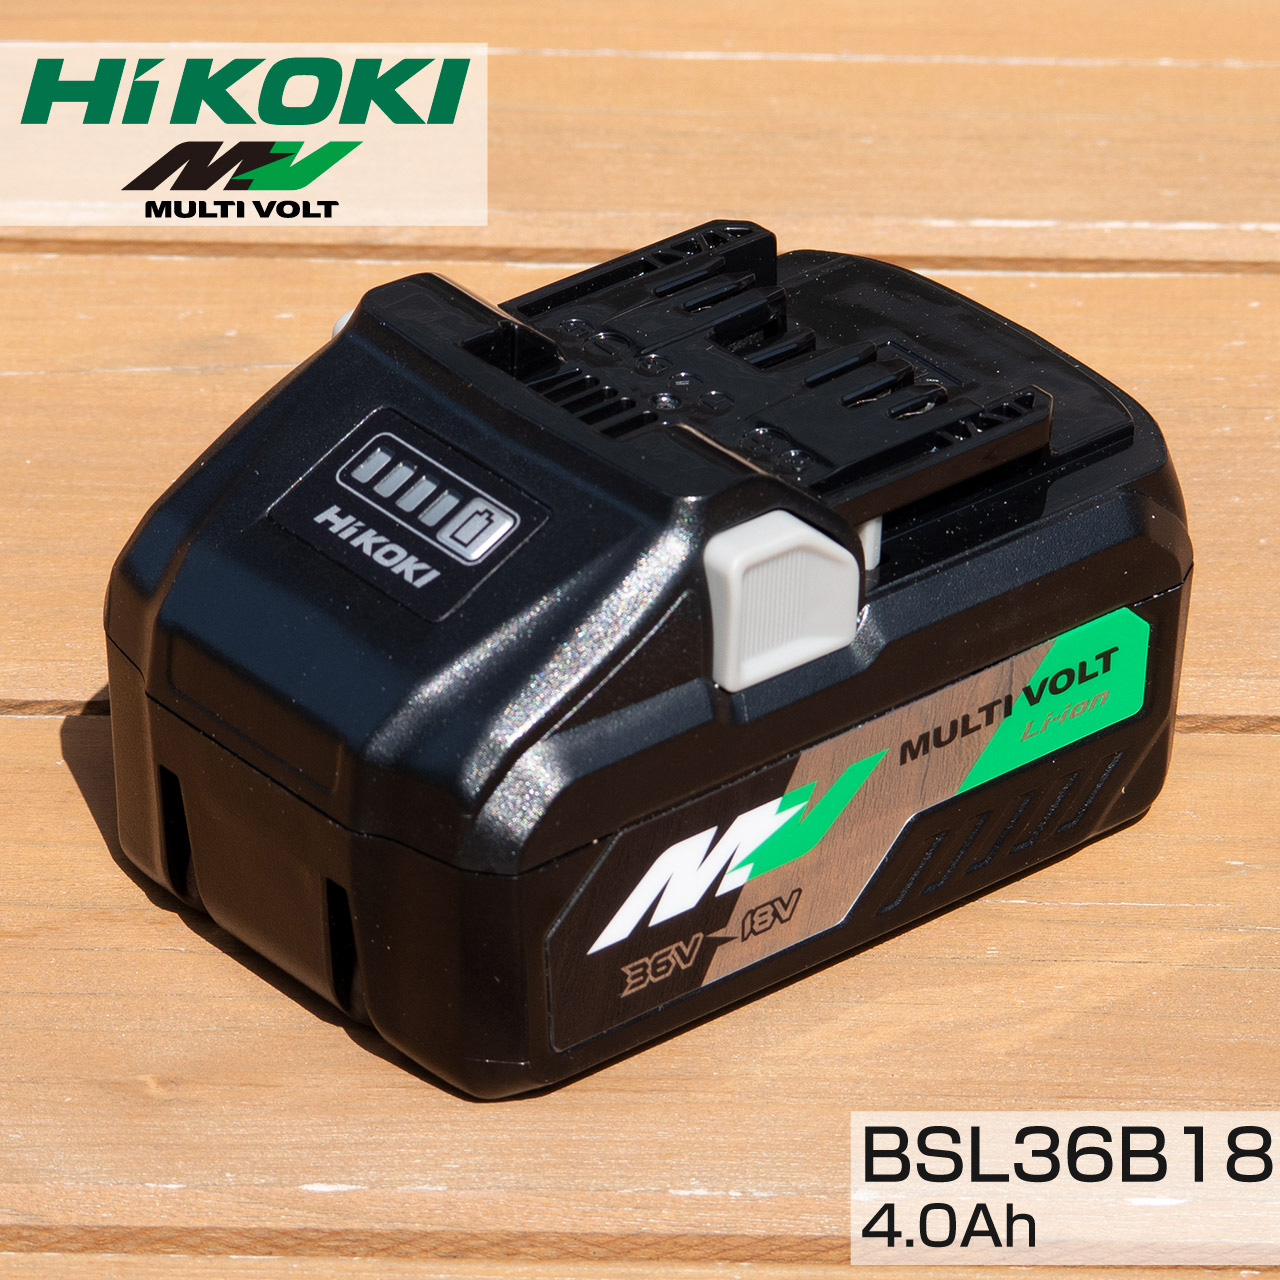 HiKOKI ハイコーキ マルチボルト リチウムイオン電池 バッテリー